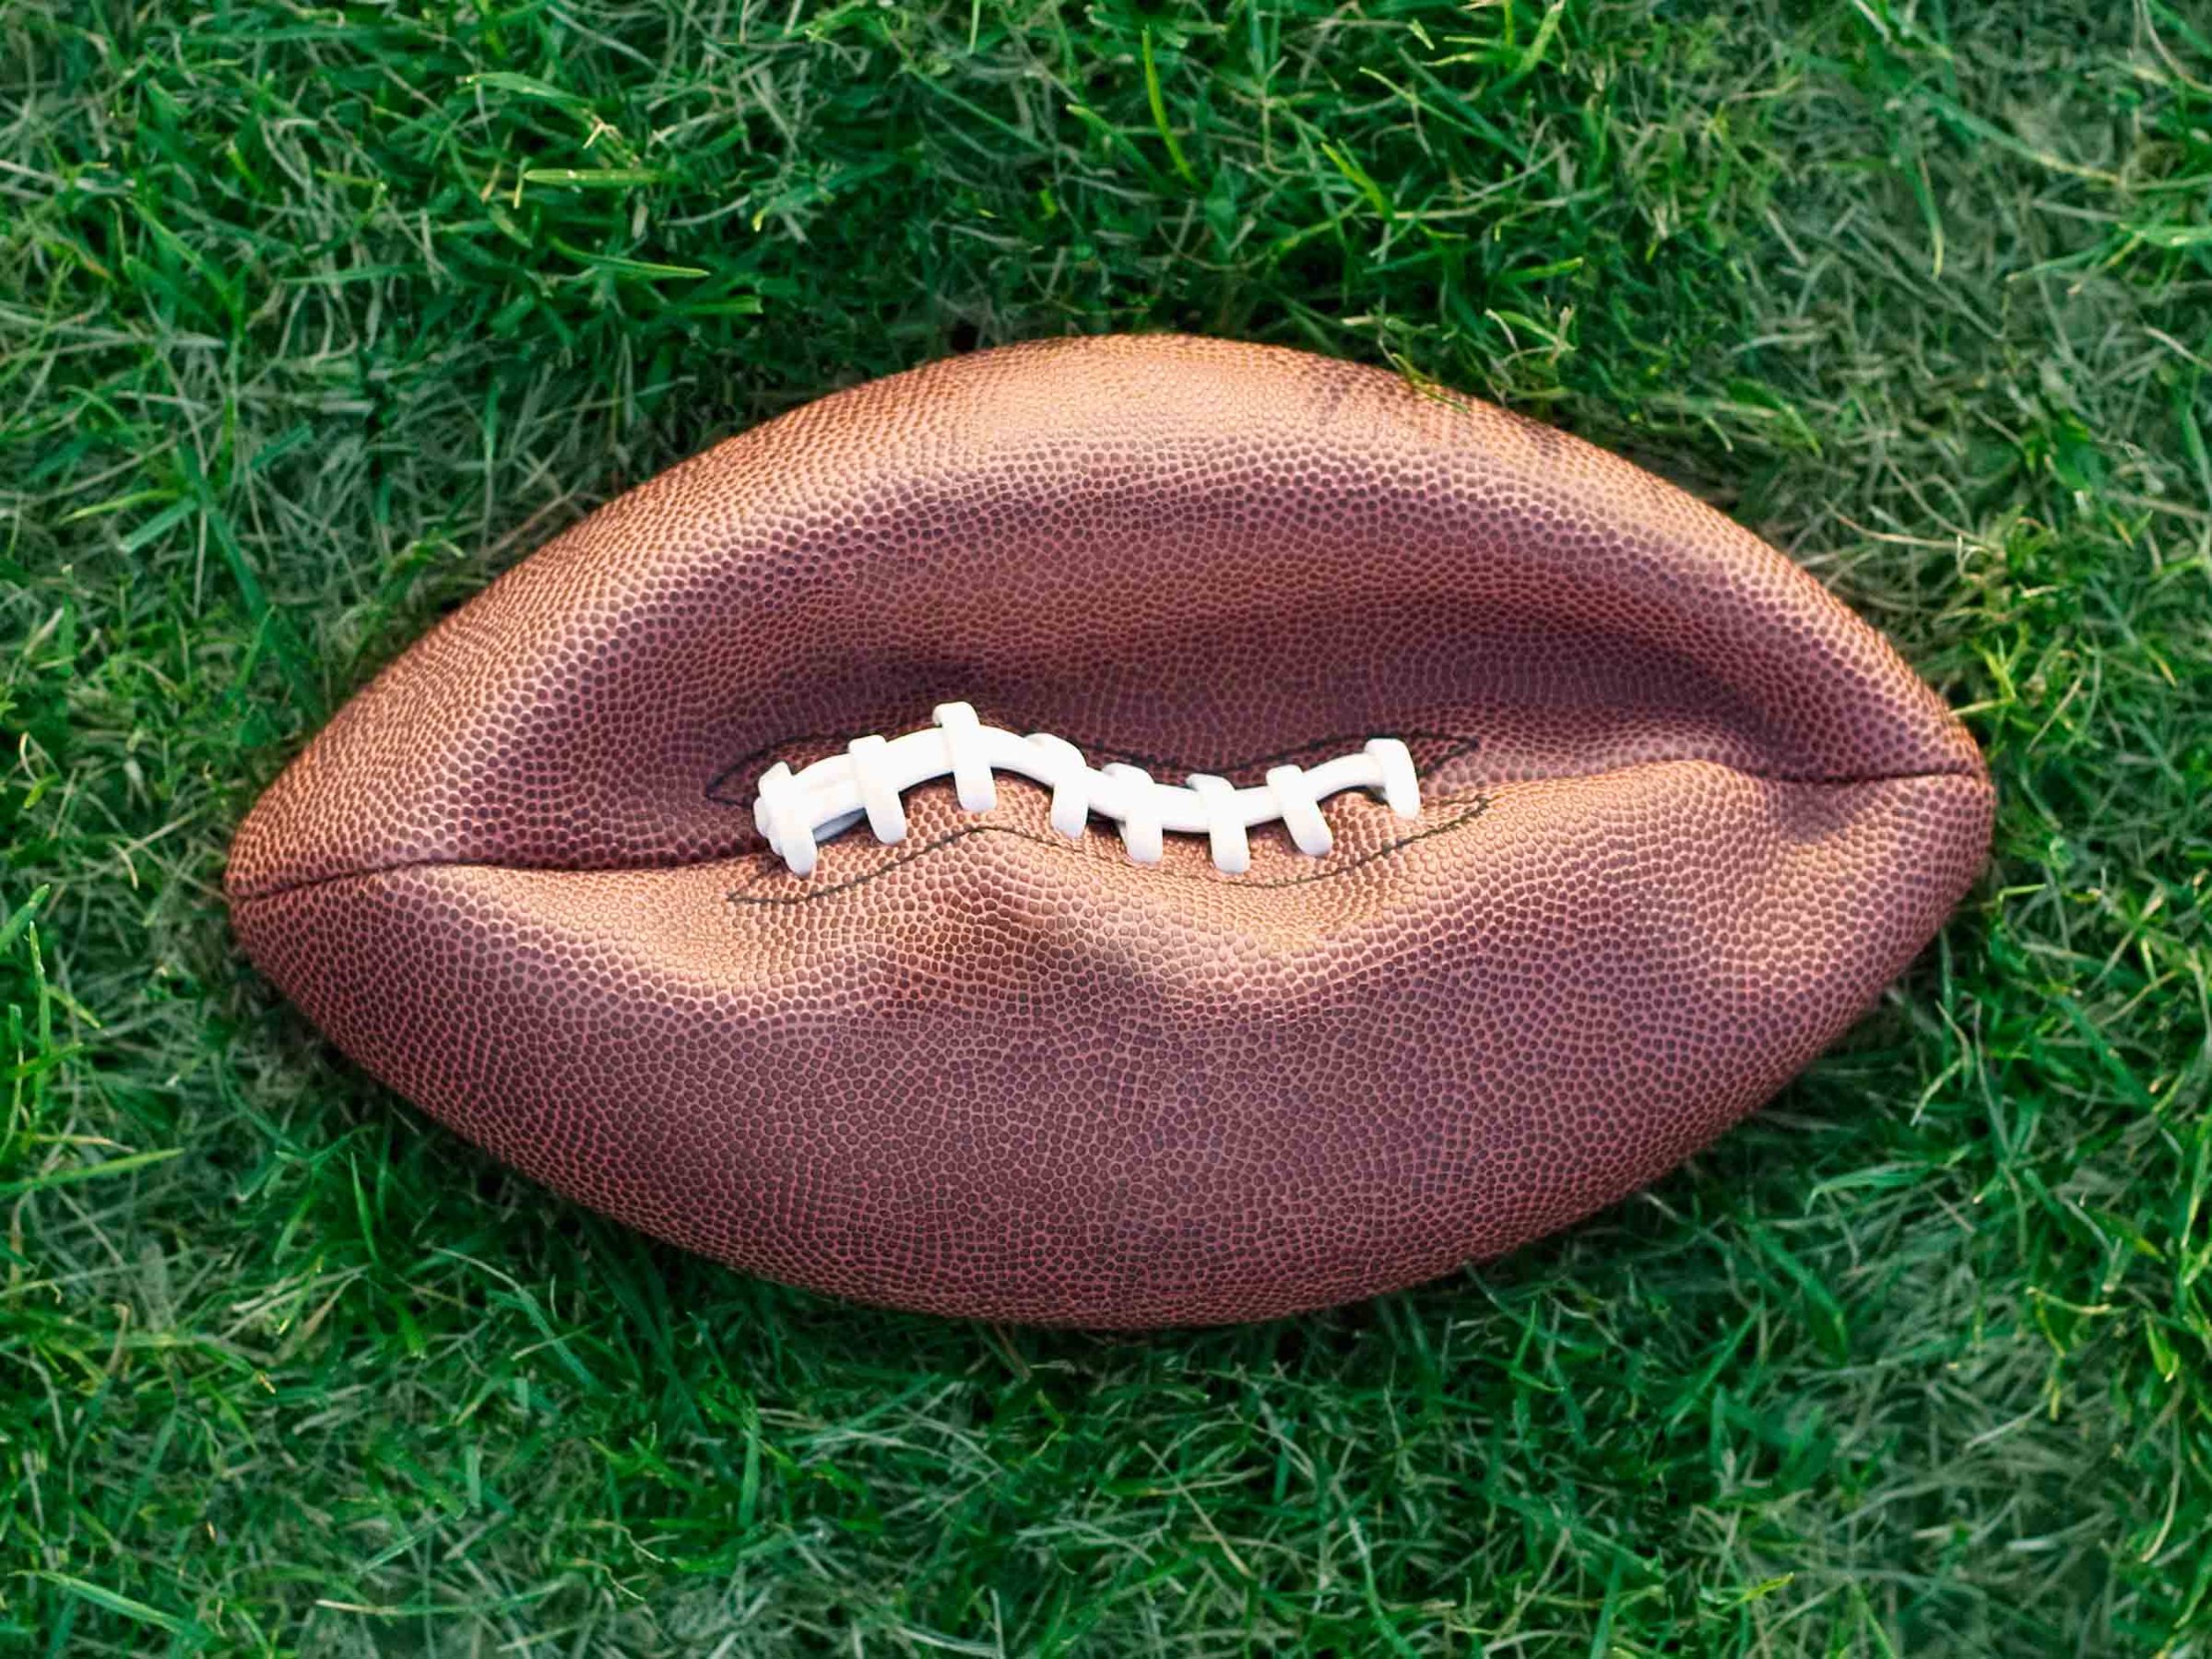 Deflated American football on grass